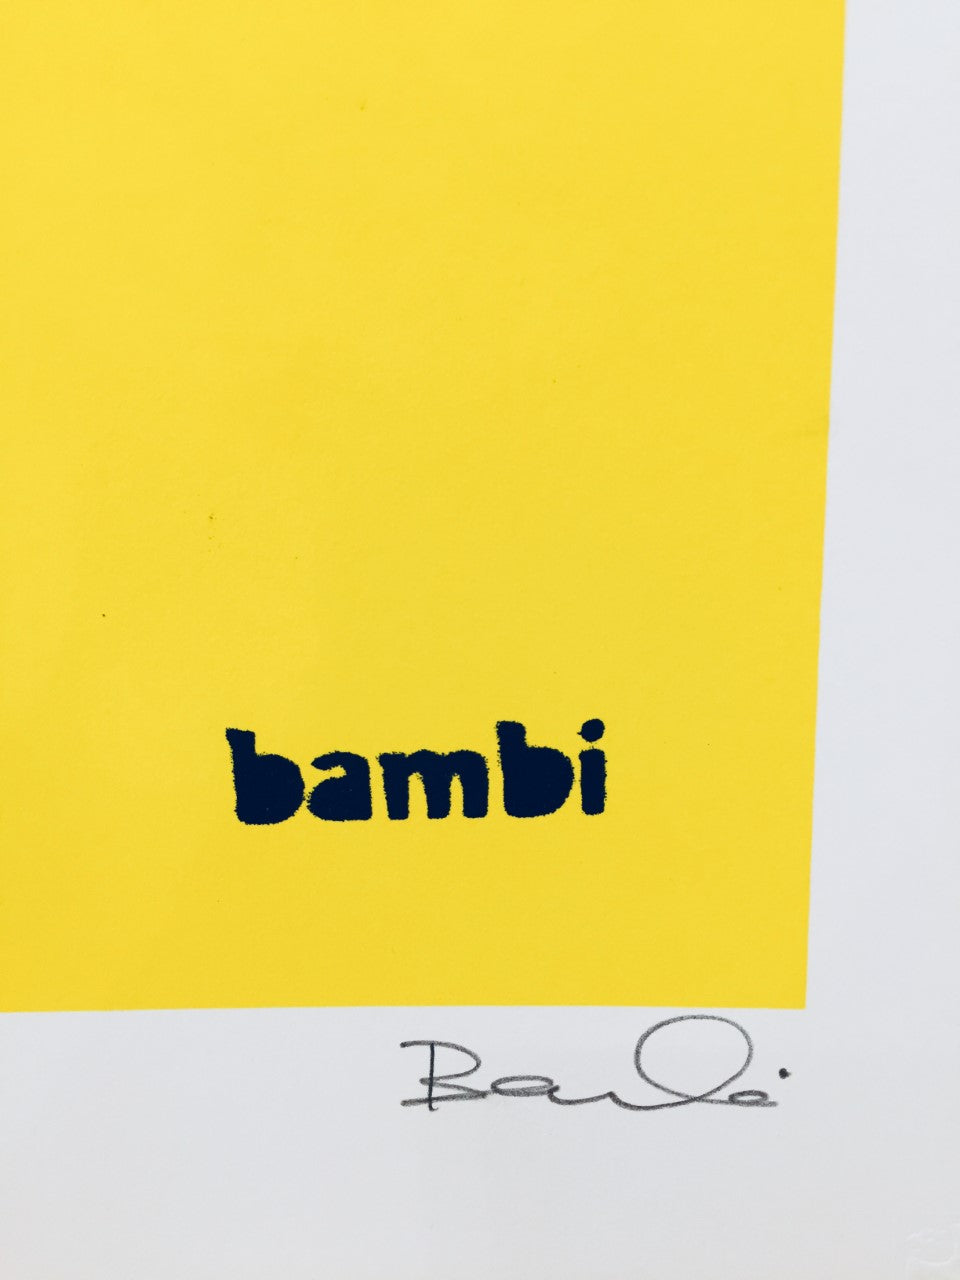 serigraphie-lie-lie-land-yellow-bambi